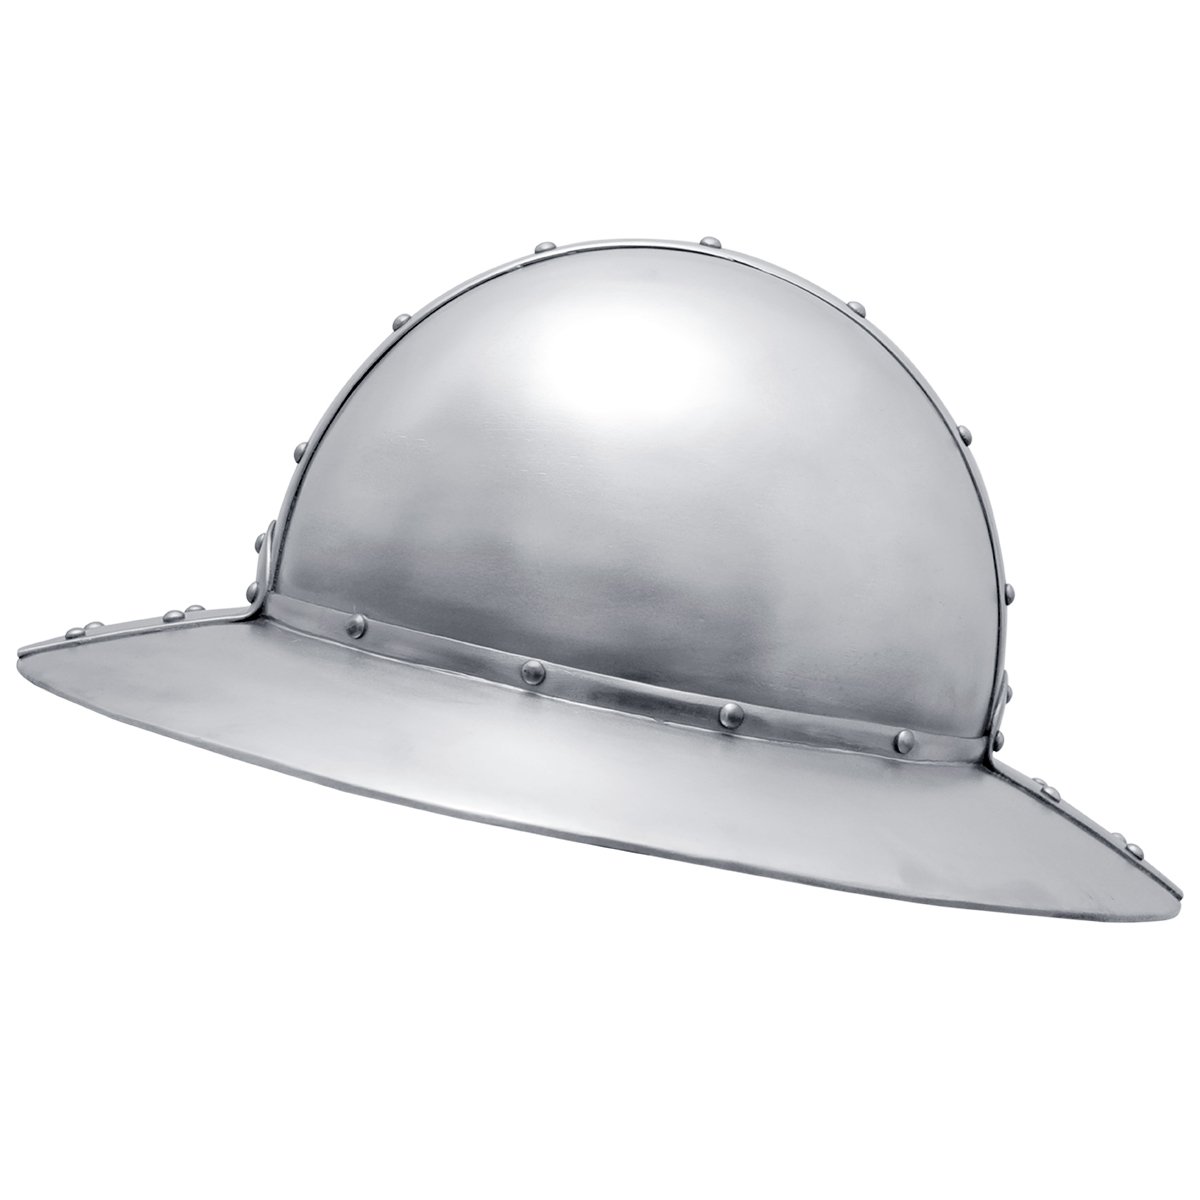 XIII th C Kettle Hat helmet, Size XL